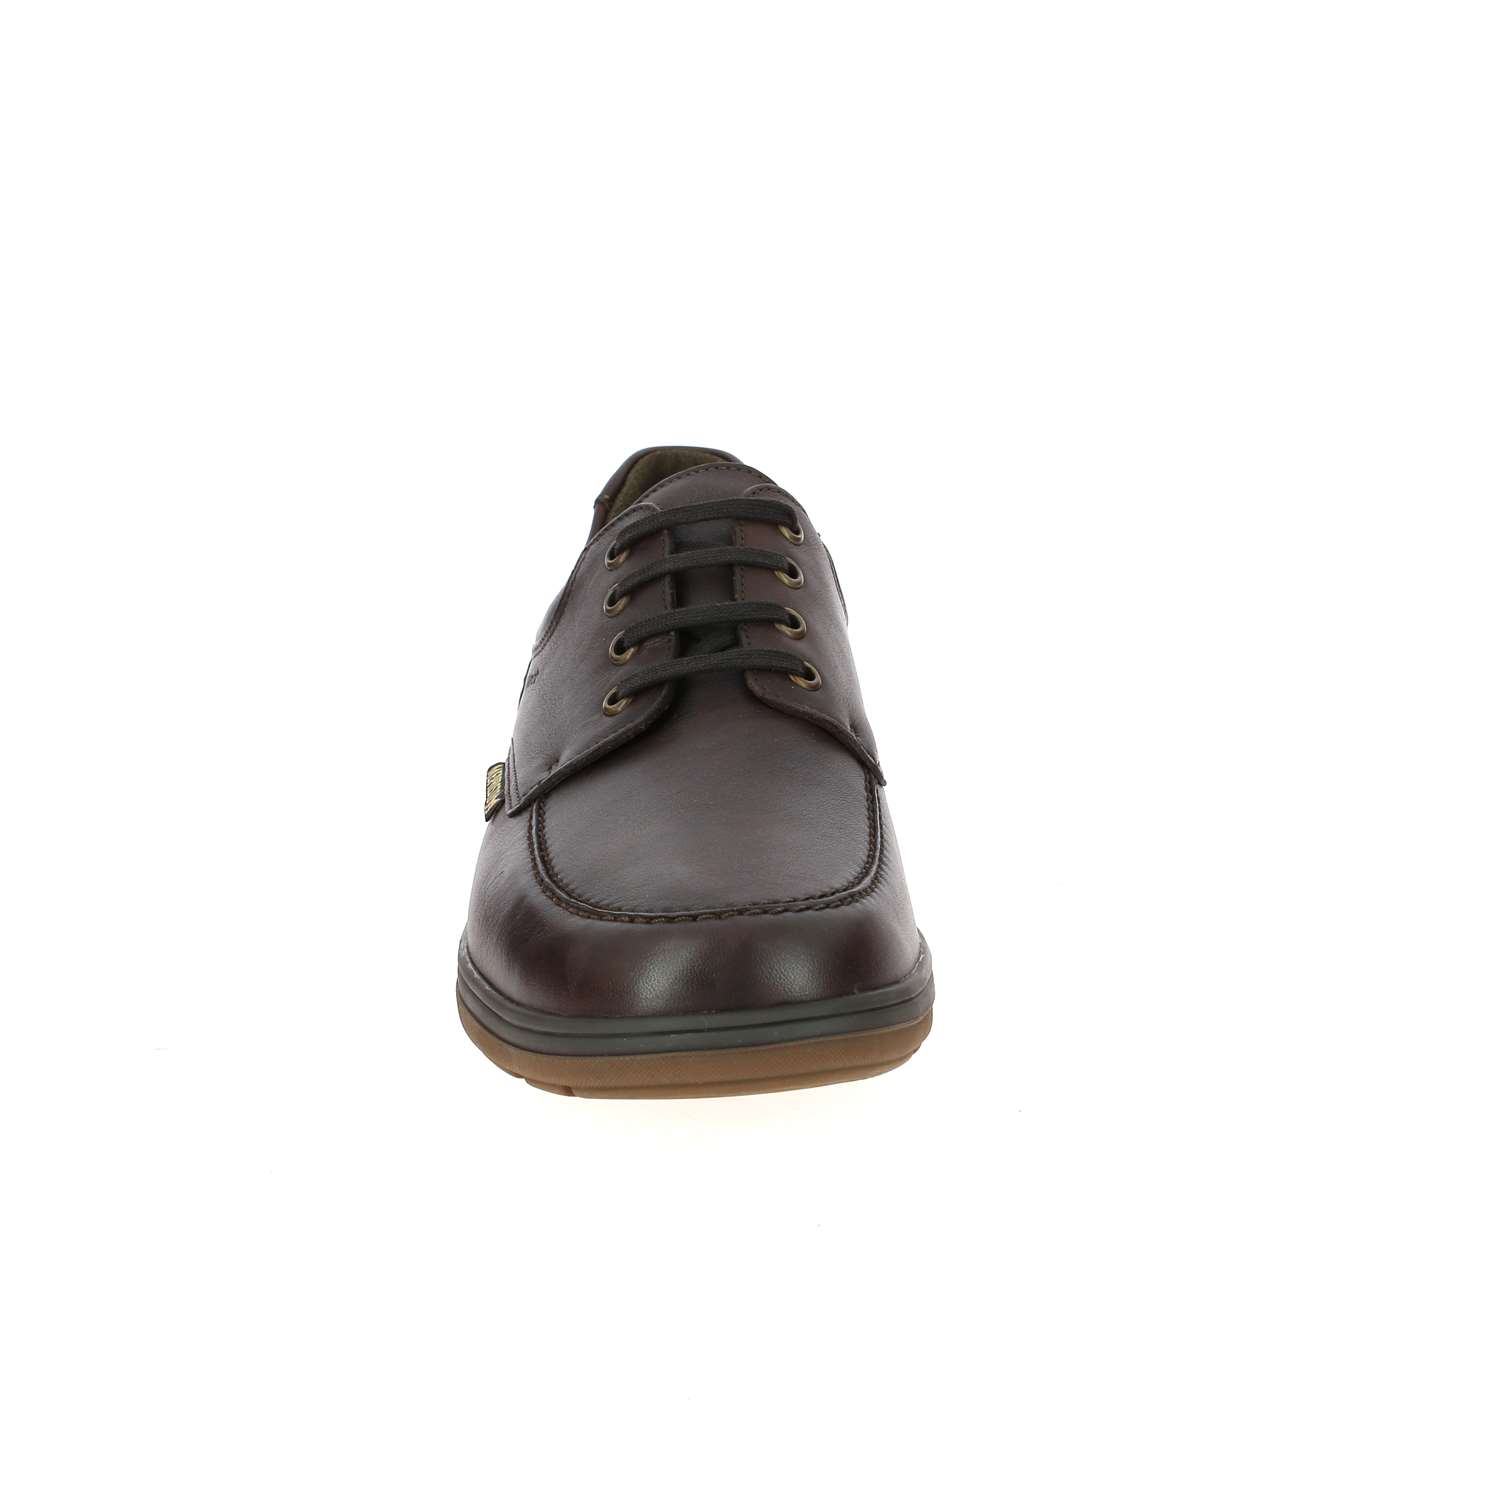 03 - DOUK - MEPHISTO - Chaussures à lacets - Cuir